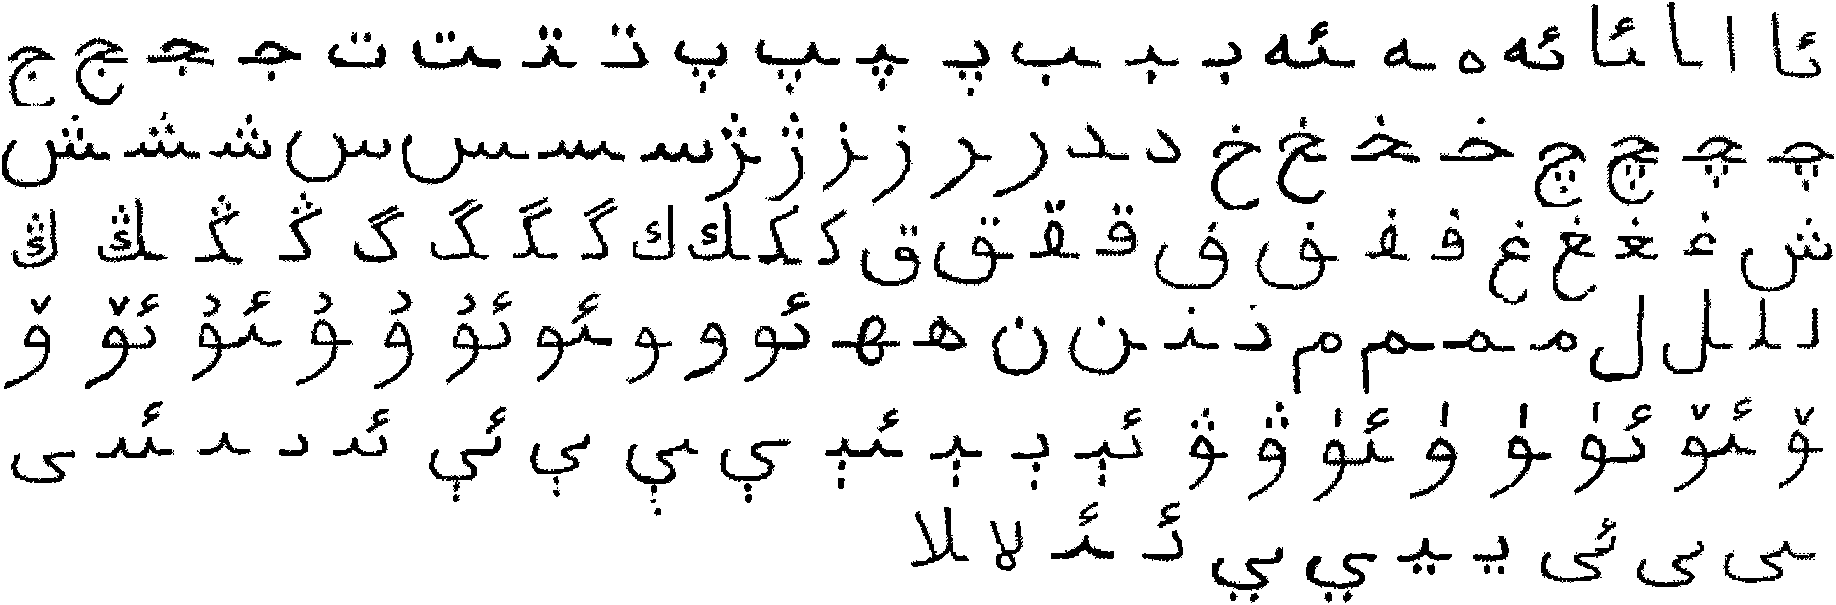 Method for identifying handwritten Uigur characters